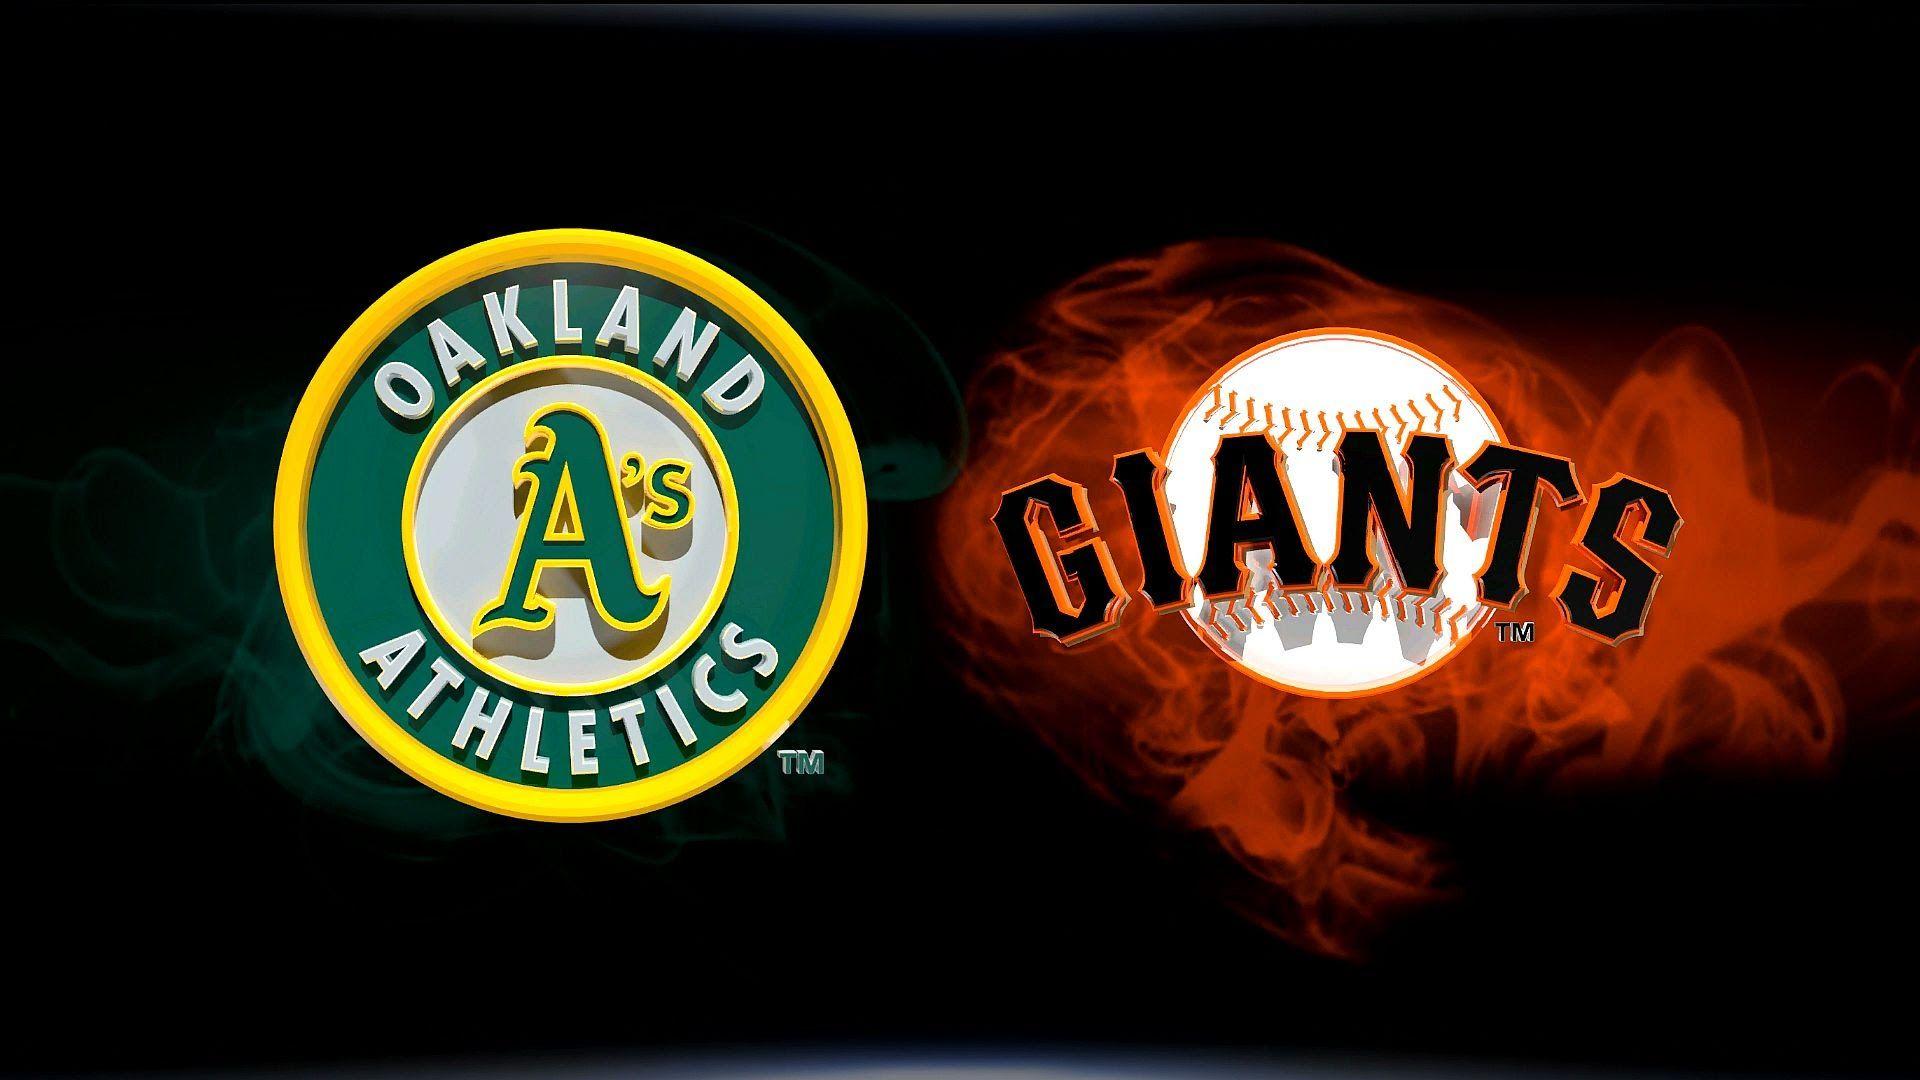 San Francisco Giants vs. Oakland Athletics Tickets 2018